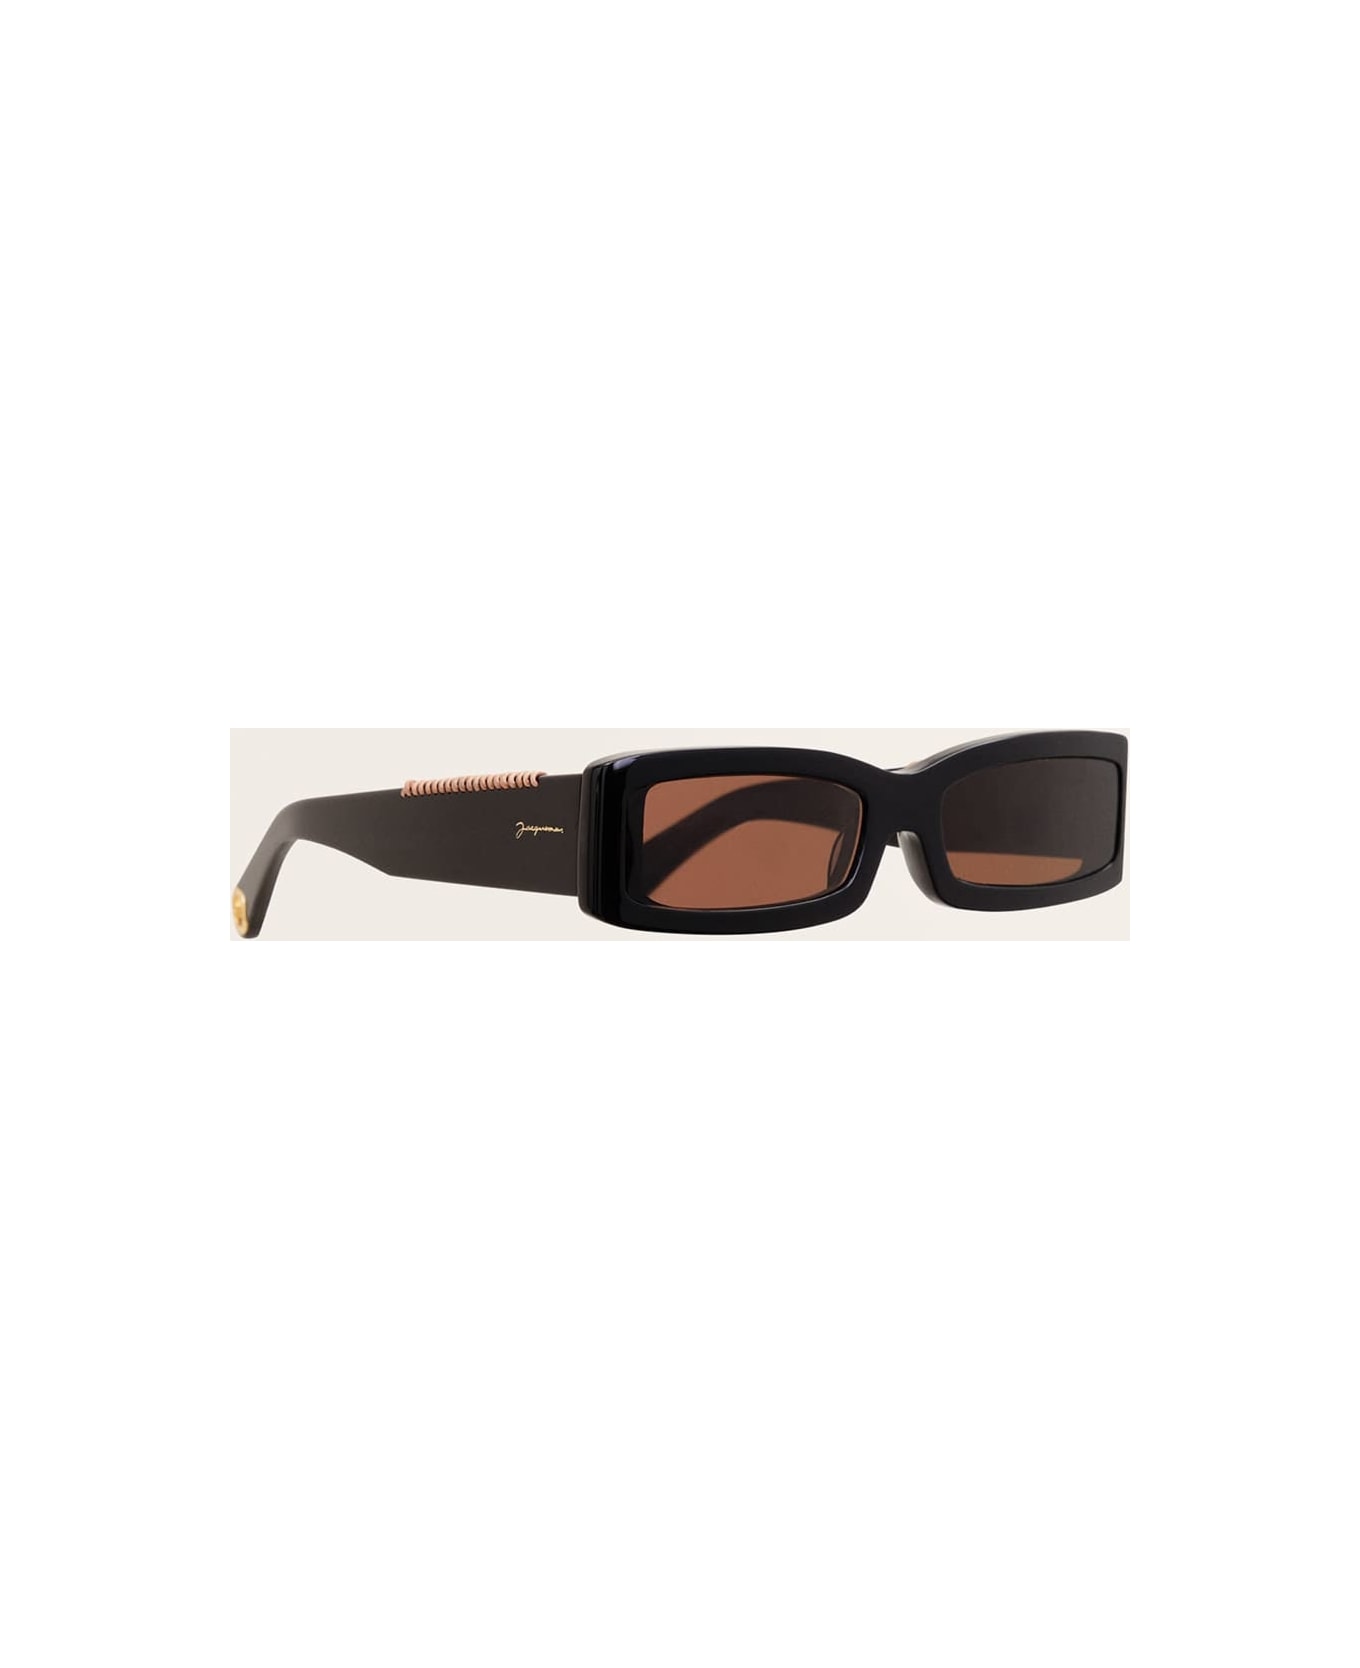 Jacquemus Les Lunettes 97 Black Sunglasses Sunglasses - Black